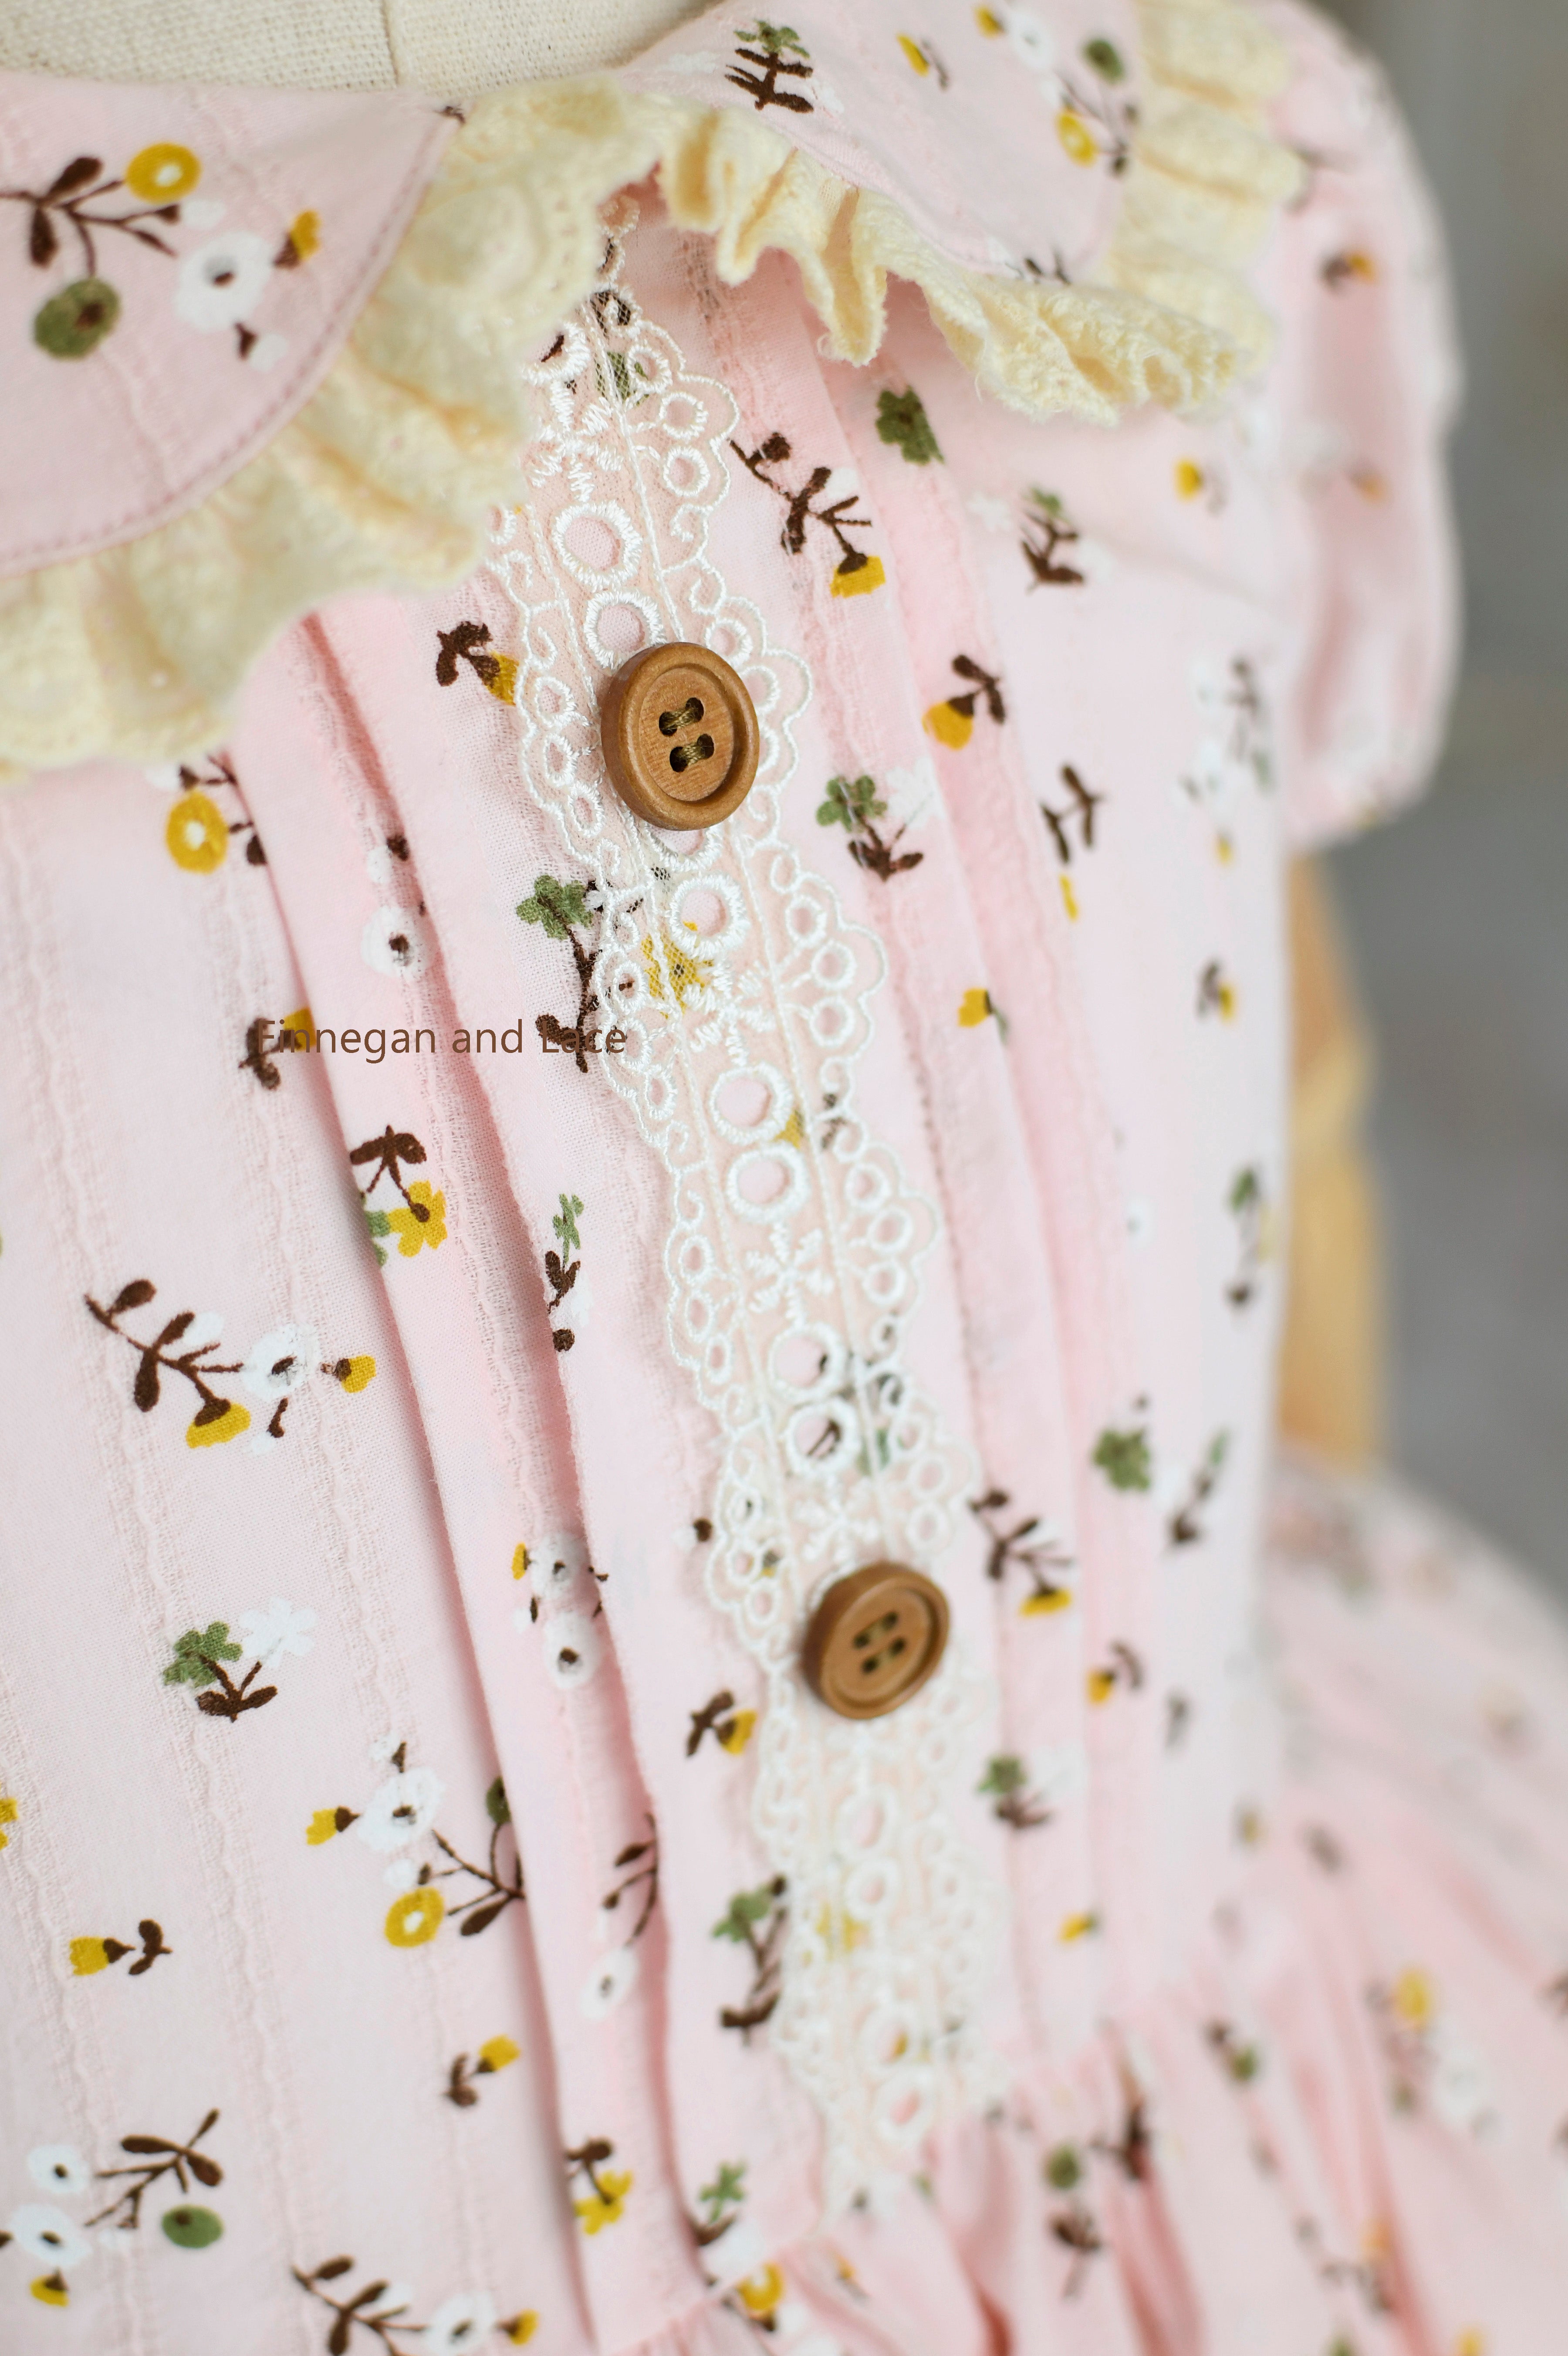 Garden Affair Vintage Inspired Dress -Set includes Dress, Bow, detachable apron